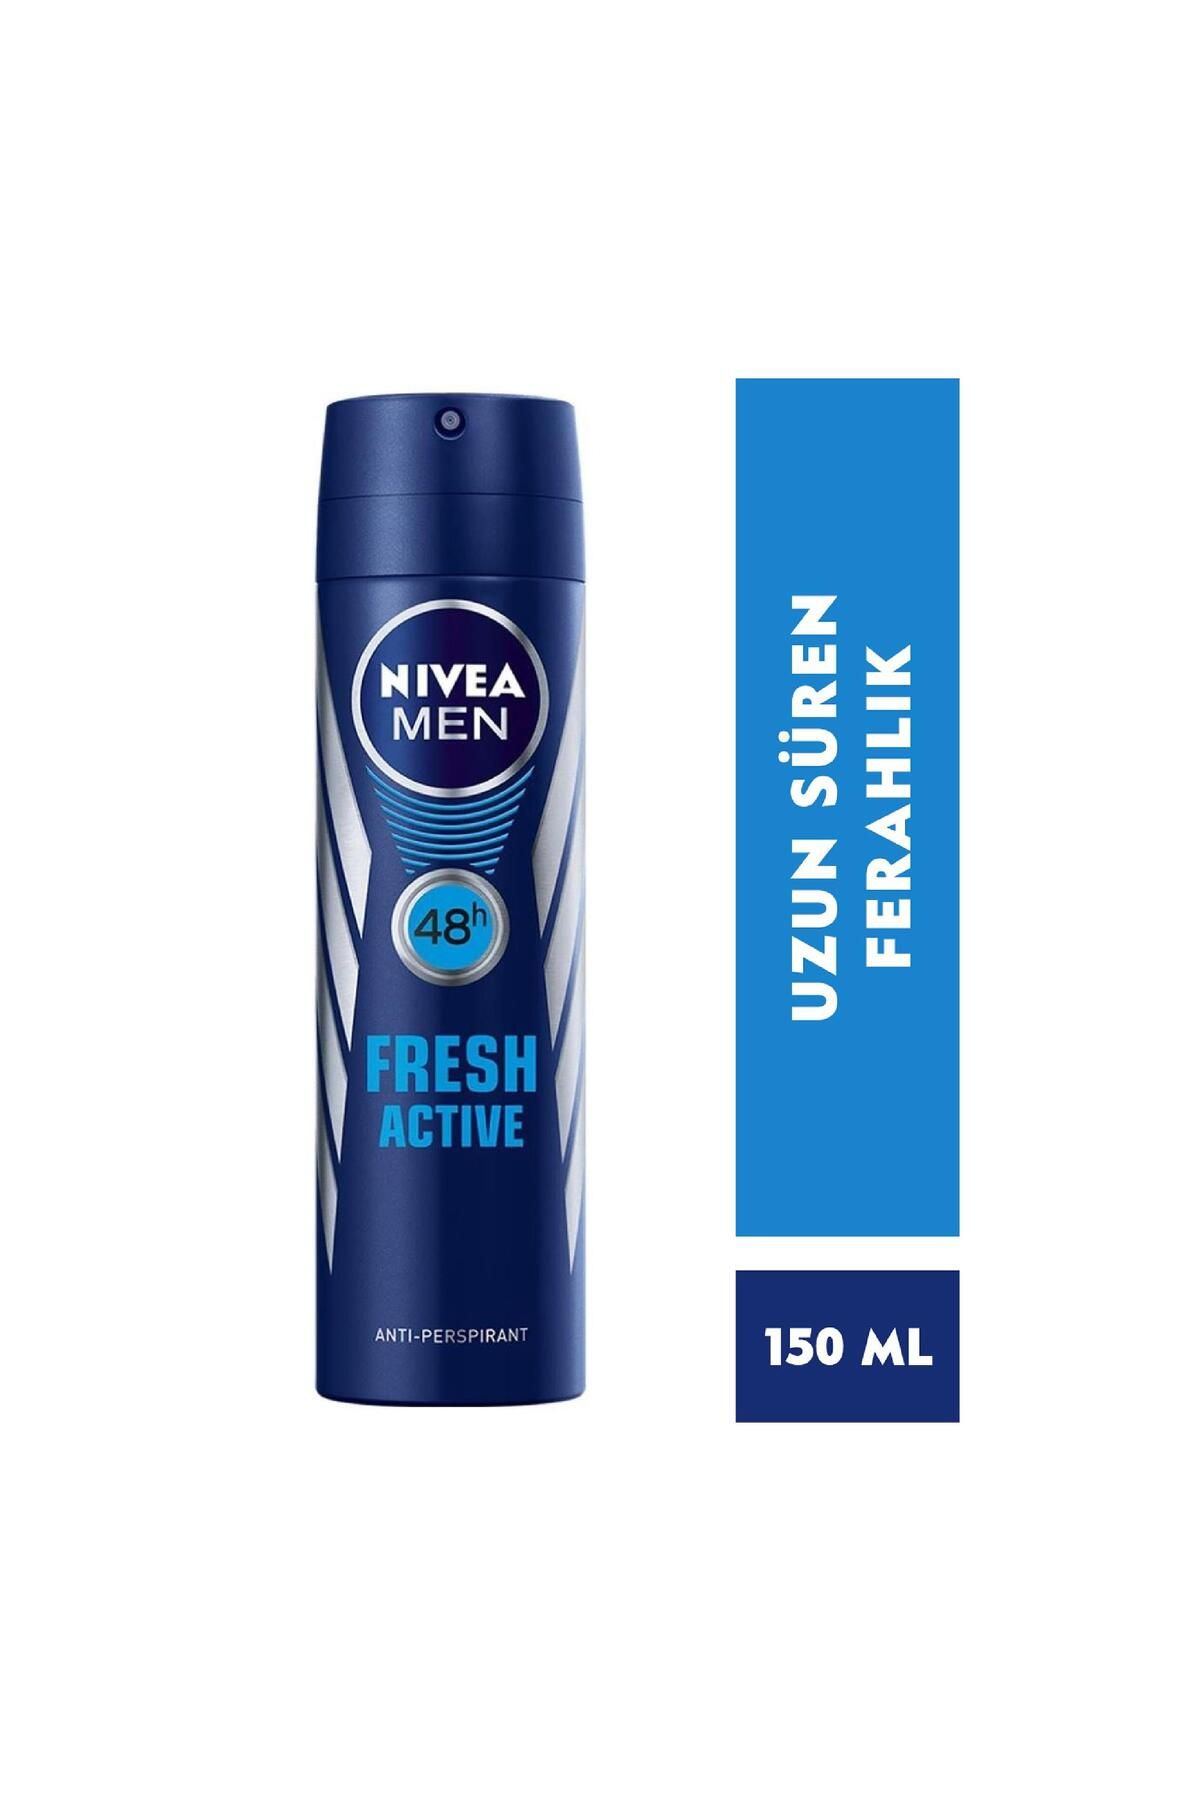 NIVEA Men Fresh Active Deodorant Pudrasız 150 ml